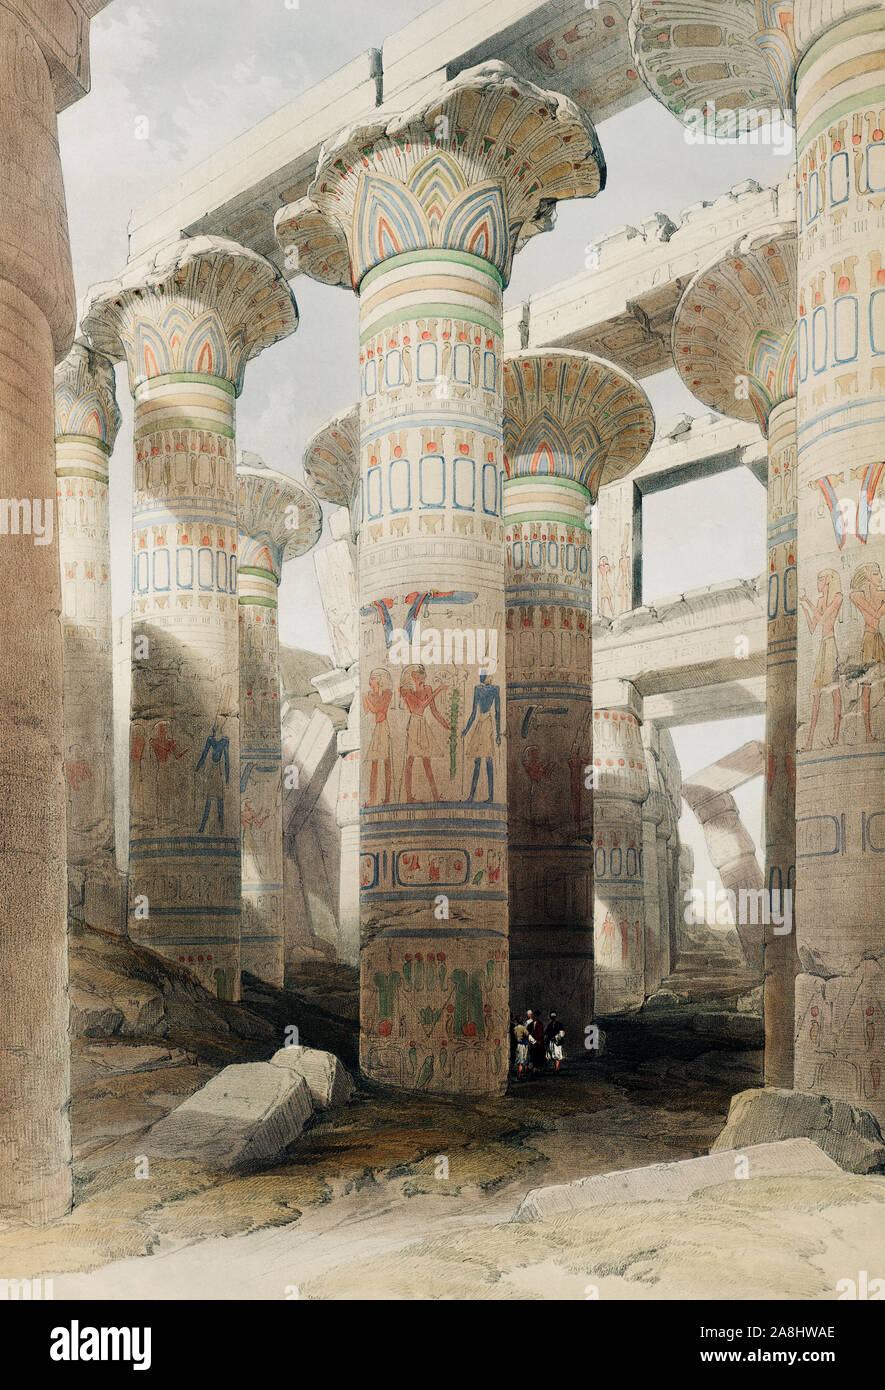 Karnac (Karnak) Ilustración de David Roberts (17961864).jpg - 2A8HWAE Foto de stock